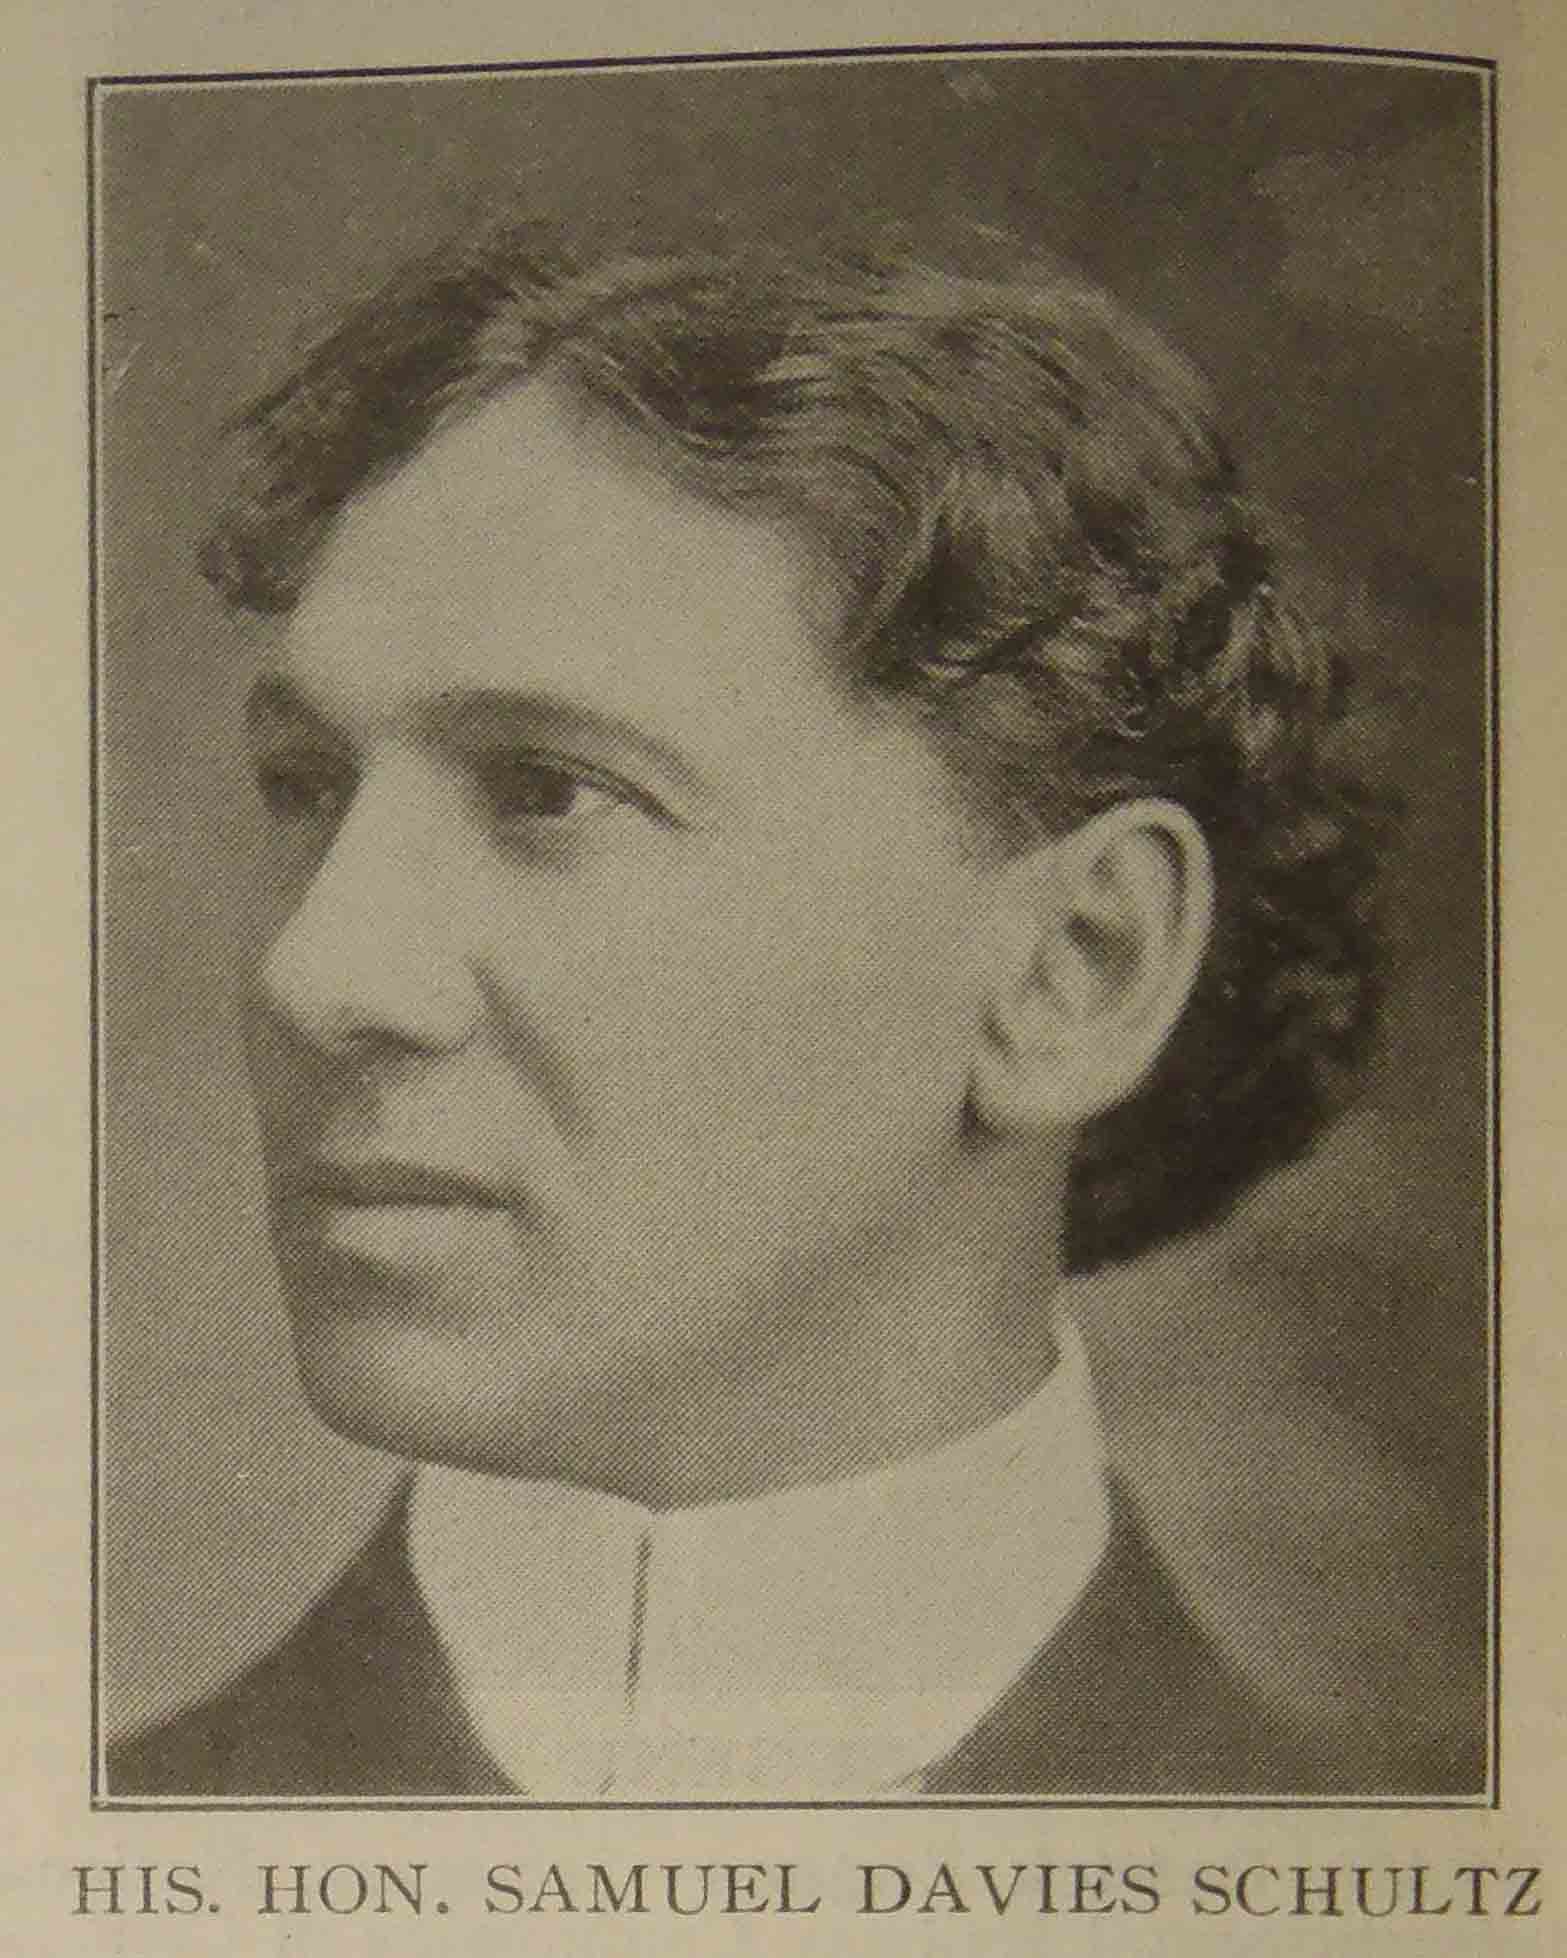 Judge Samuel Davies Schultz